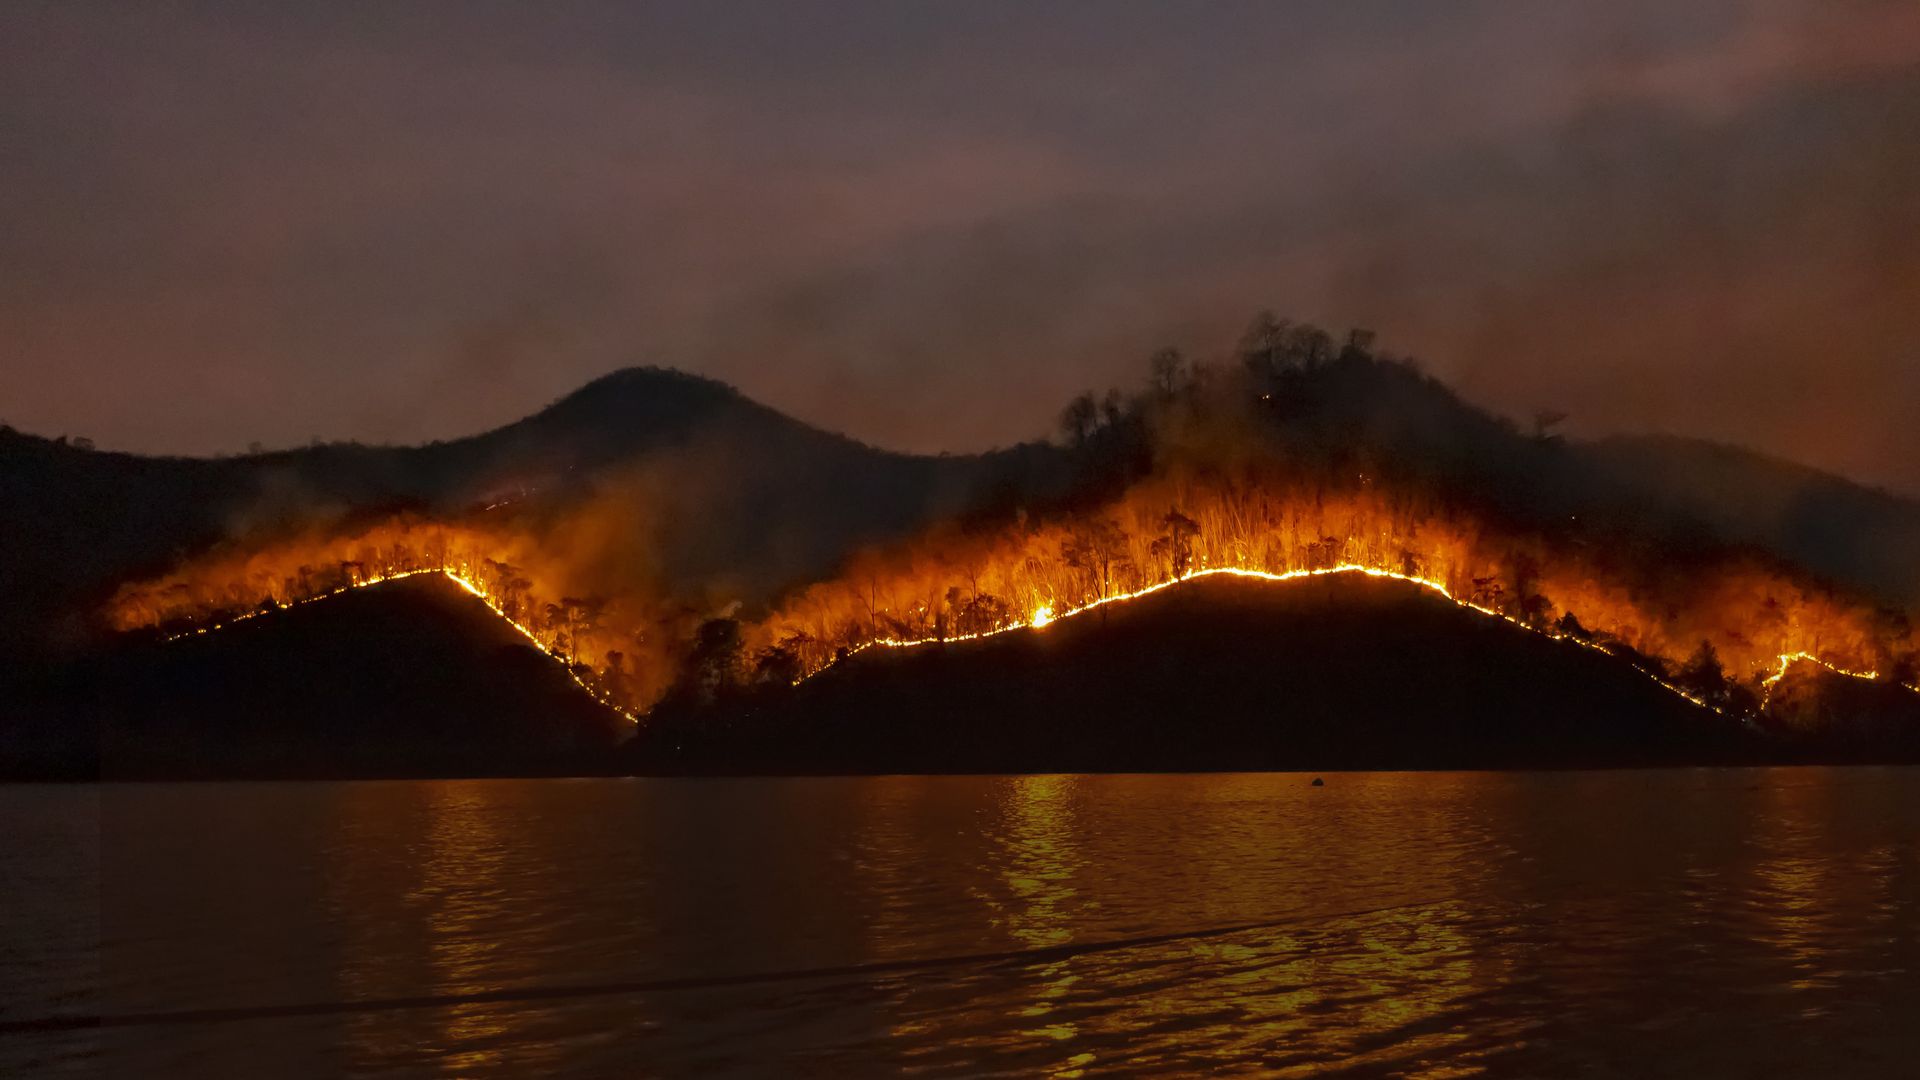 Megafires: The Global Threat